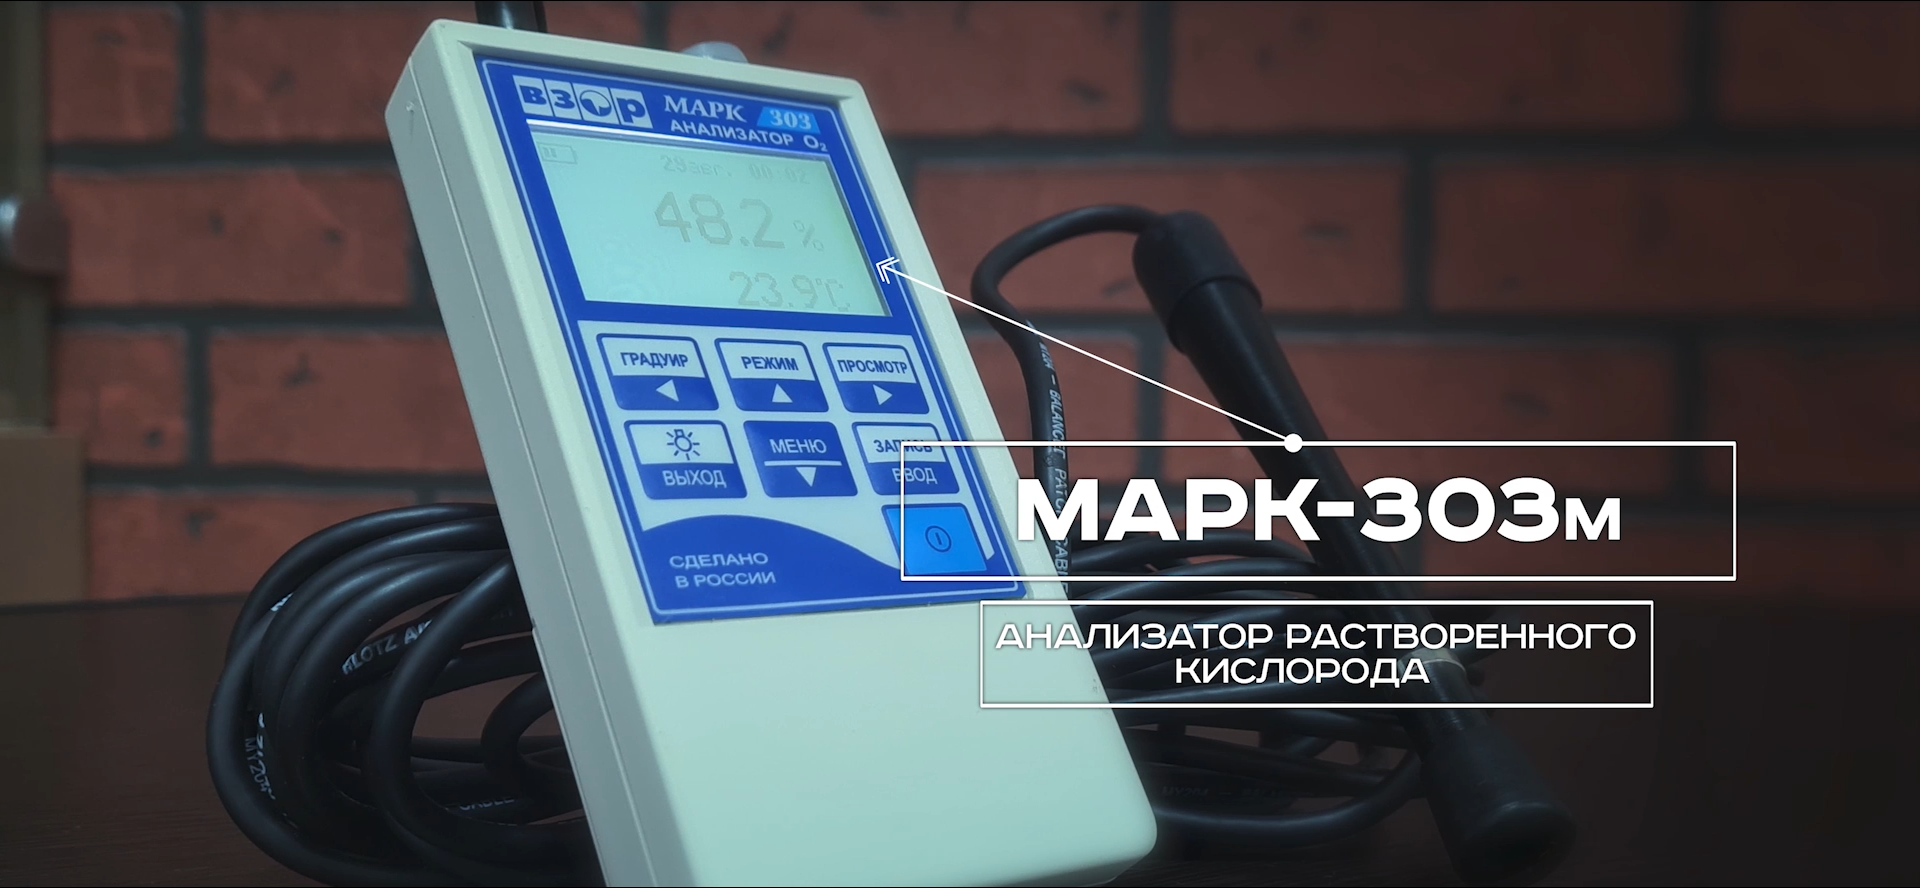 Анализатор растворенного кислорода МАРК-303М